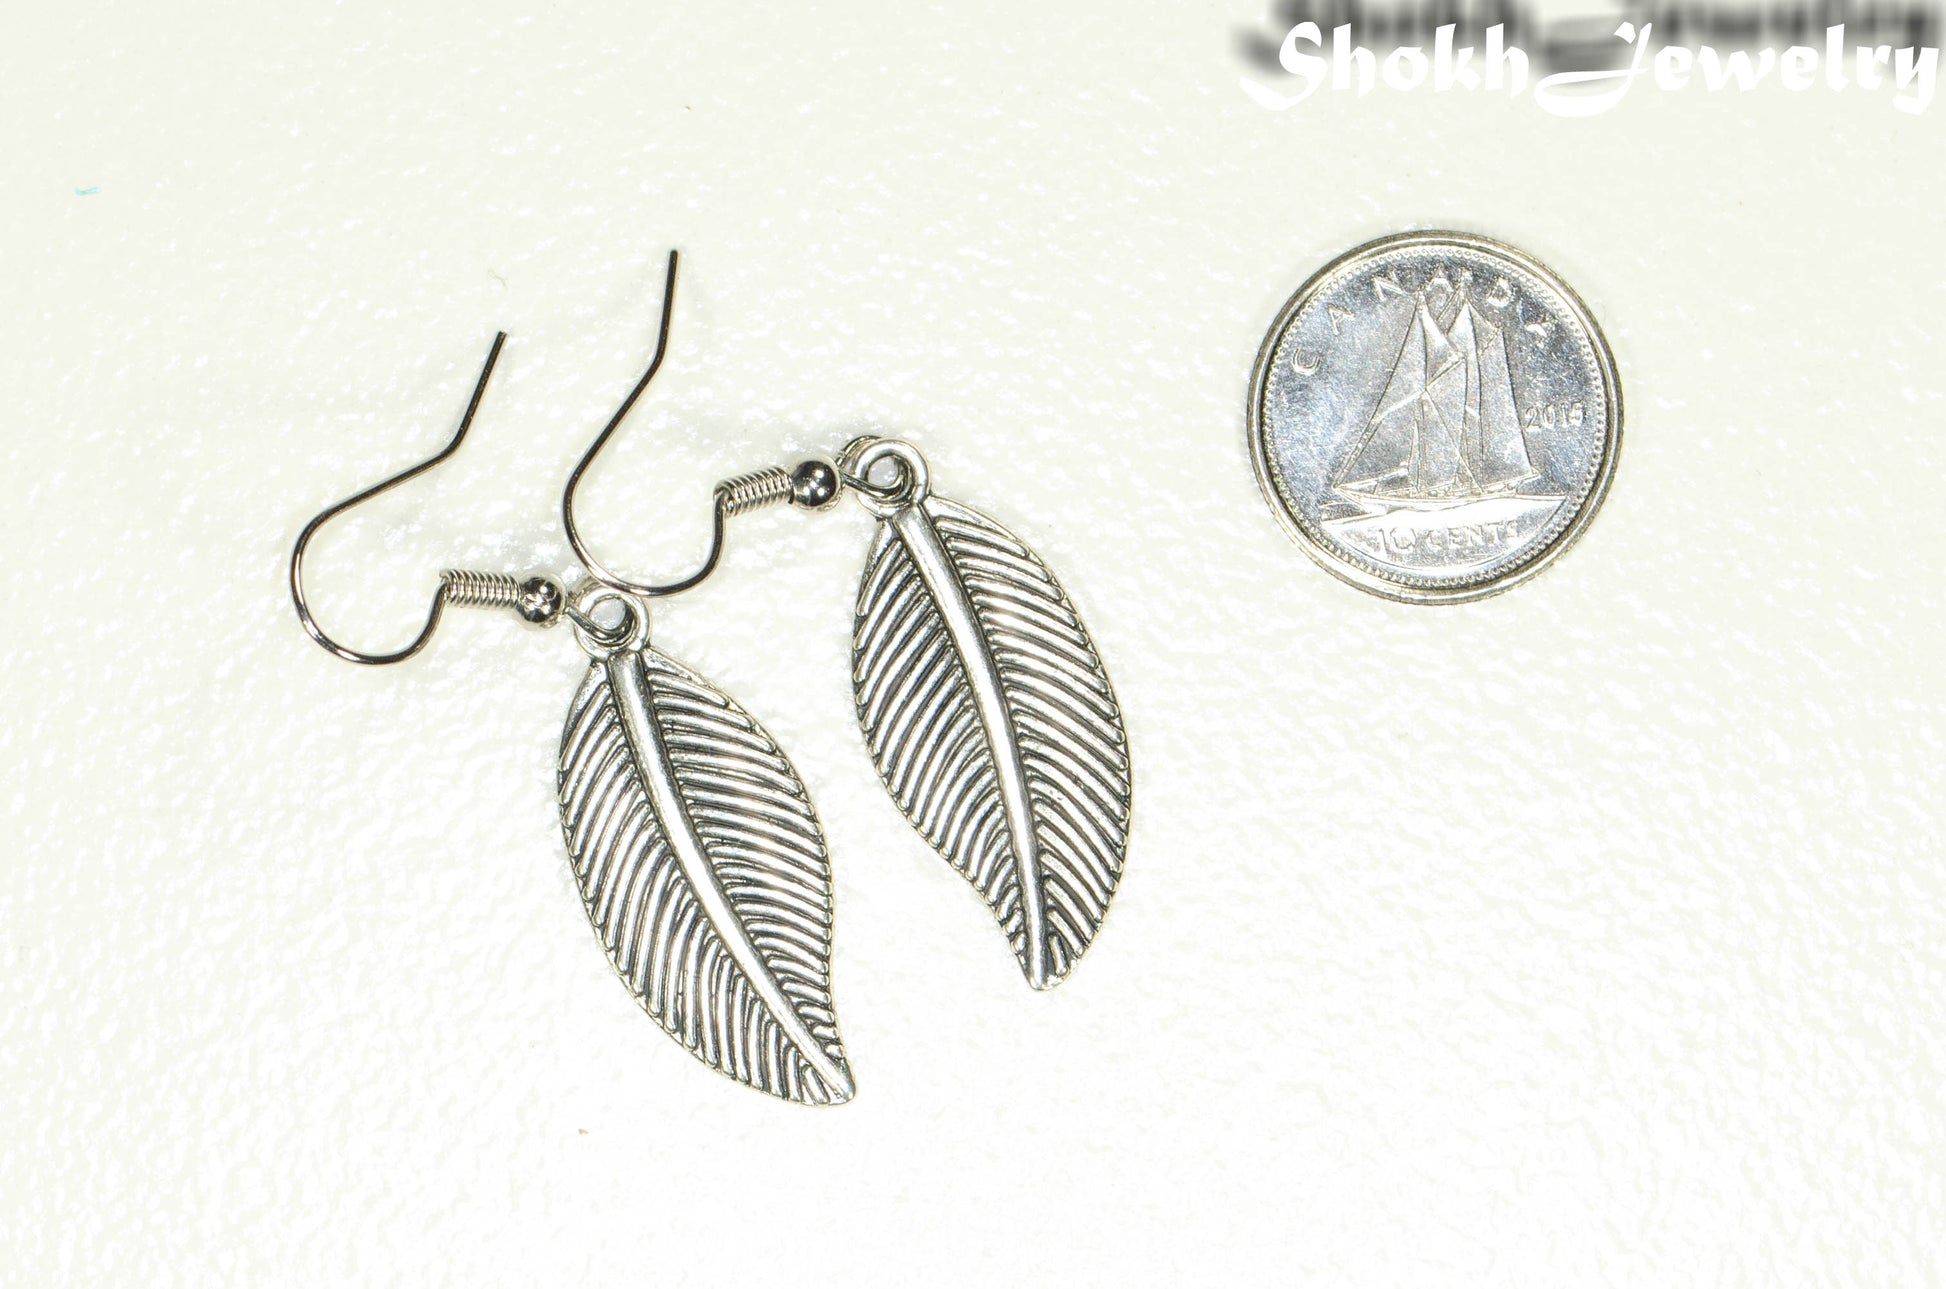 Tibetan Silver Leaf Charm Earrings beside a dime.